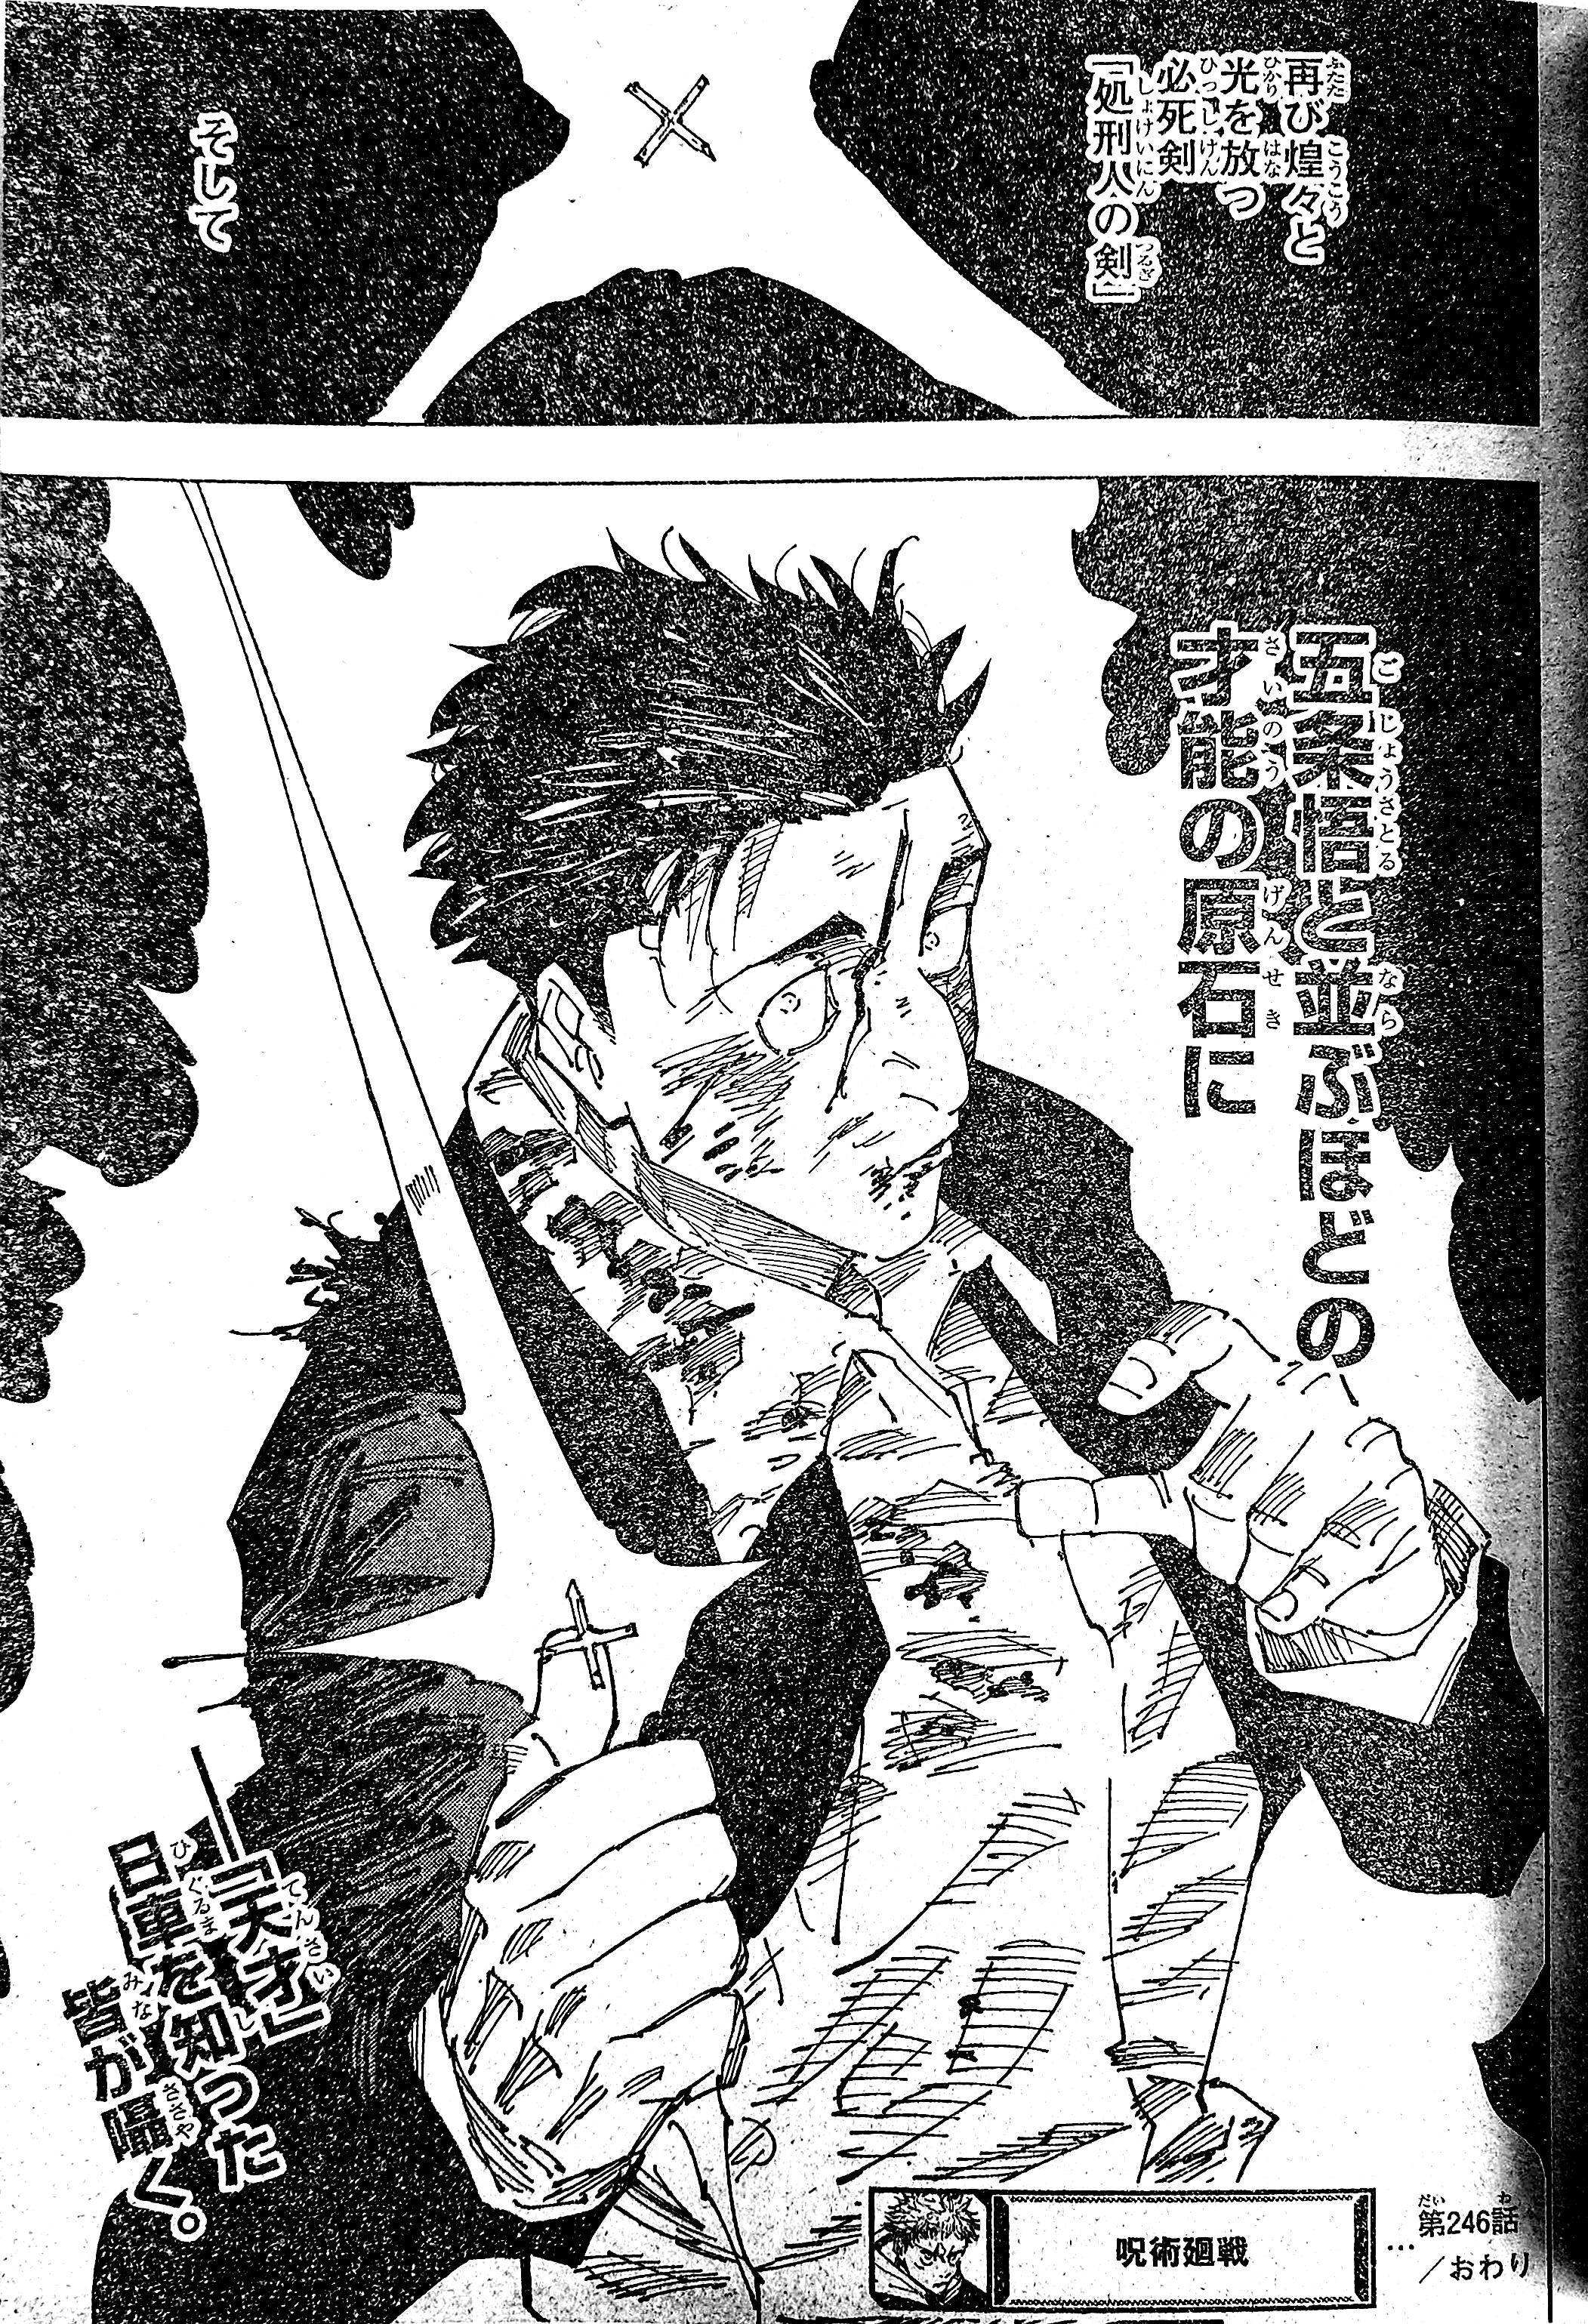 Raw and Spoilers for JJK Chapter 246: Higurama and Yuji vs Sukuna? Hakari explodes Uraume thanks to his Jackpot